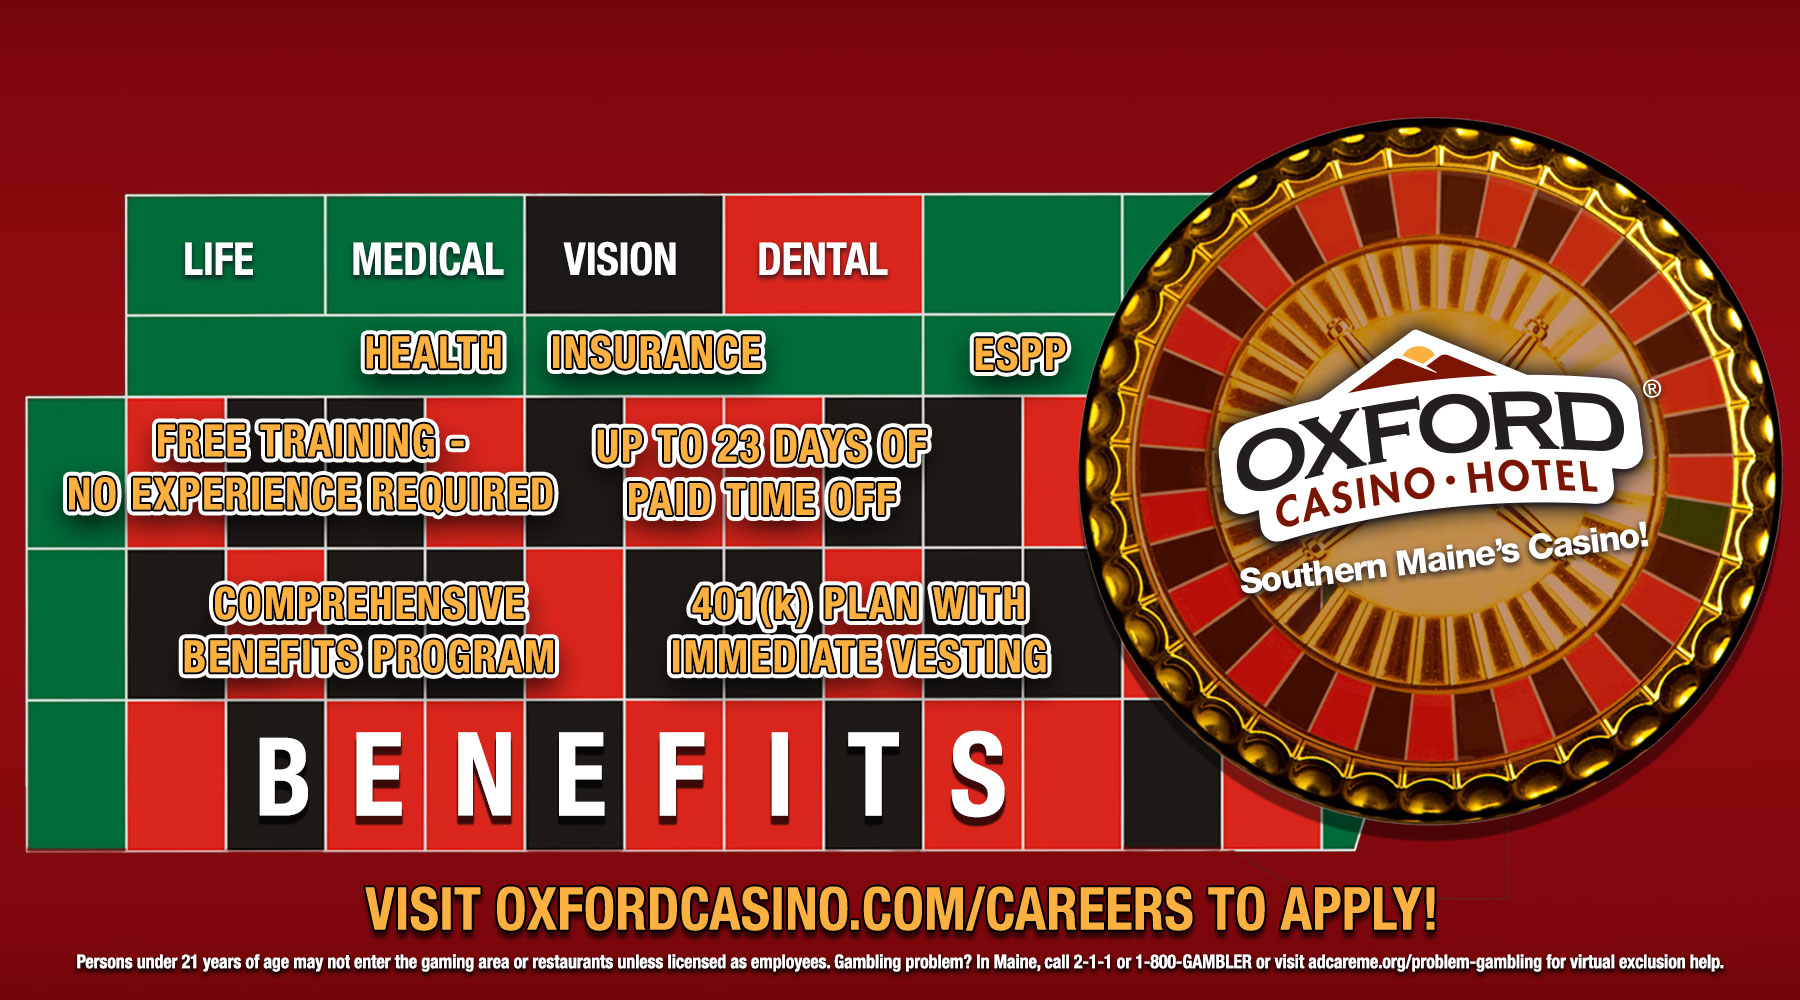 Benefits at Oxford Casino Hotel